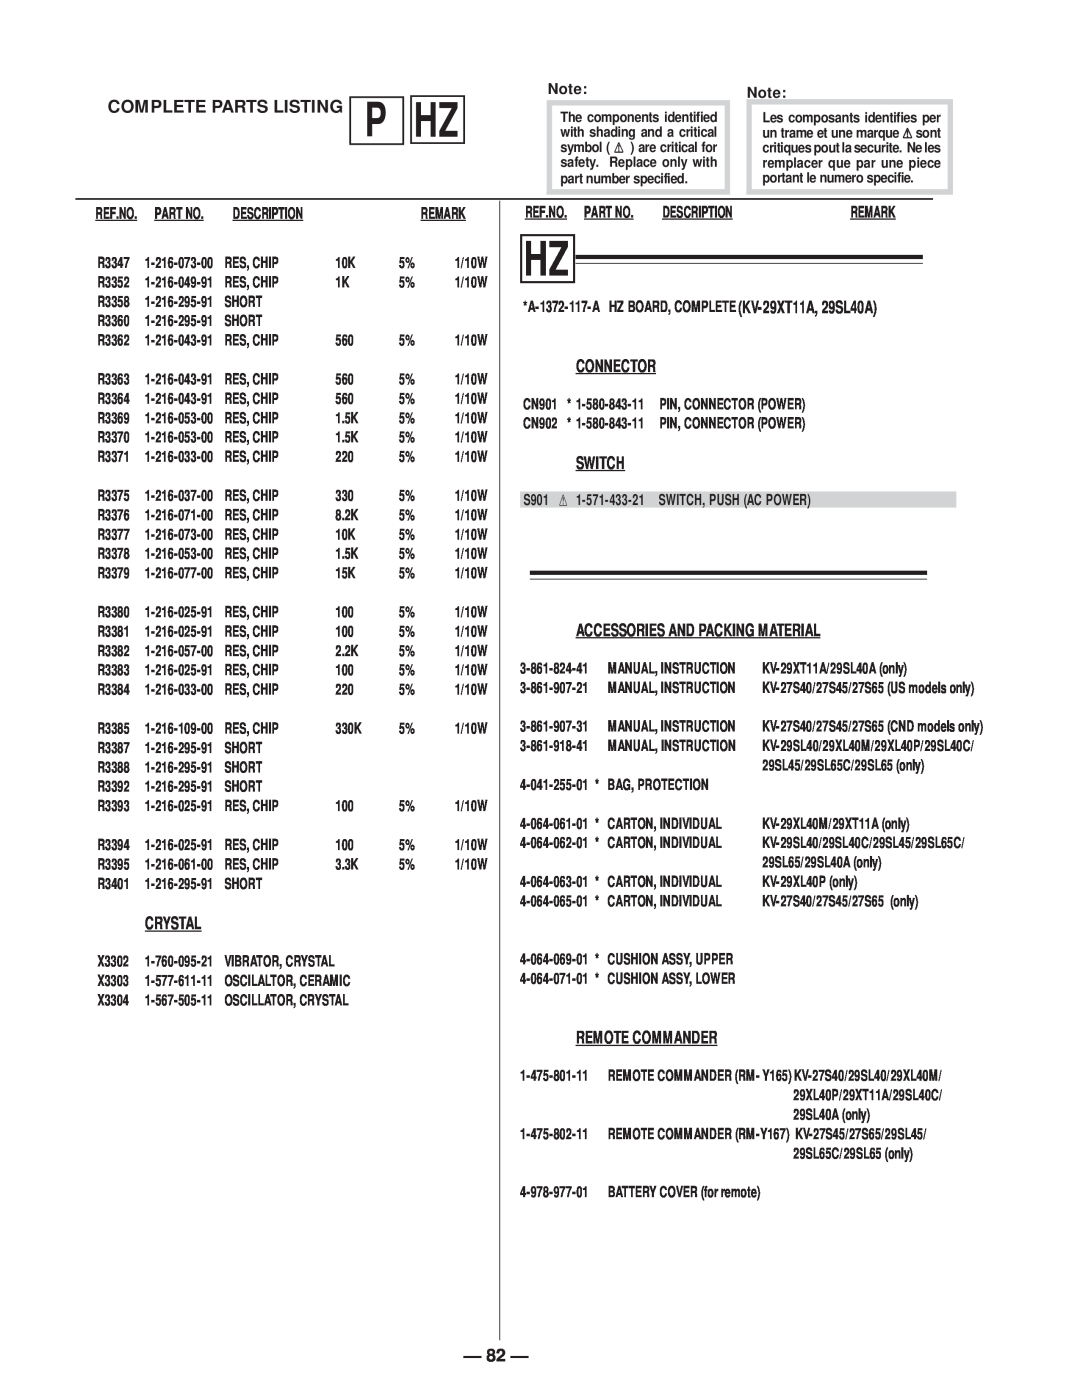 Sony KV-27S65, KV-29SL40 P Hz, Description, Remark, Ref.No. Part No, A-1372-117-A HZ BOARD, COMPLETE KV-29XT11A, 29SL40A 